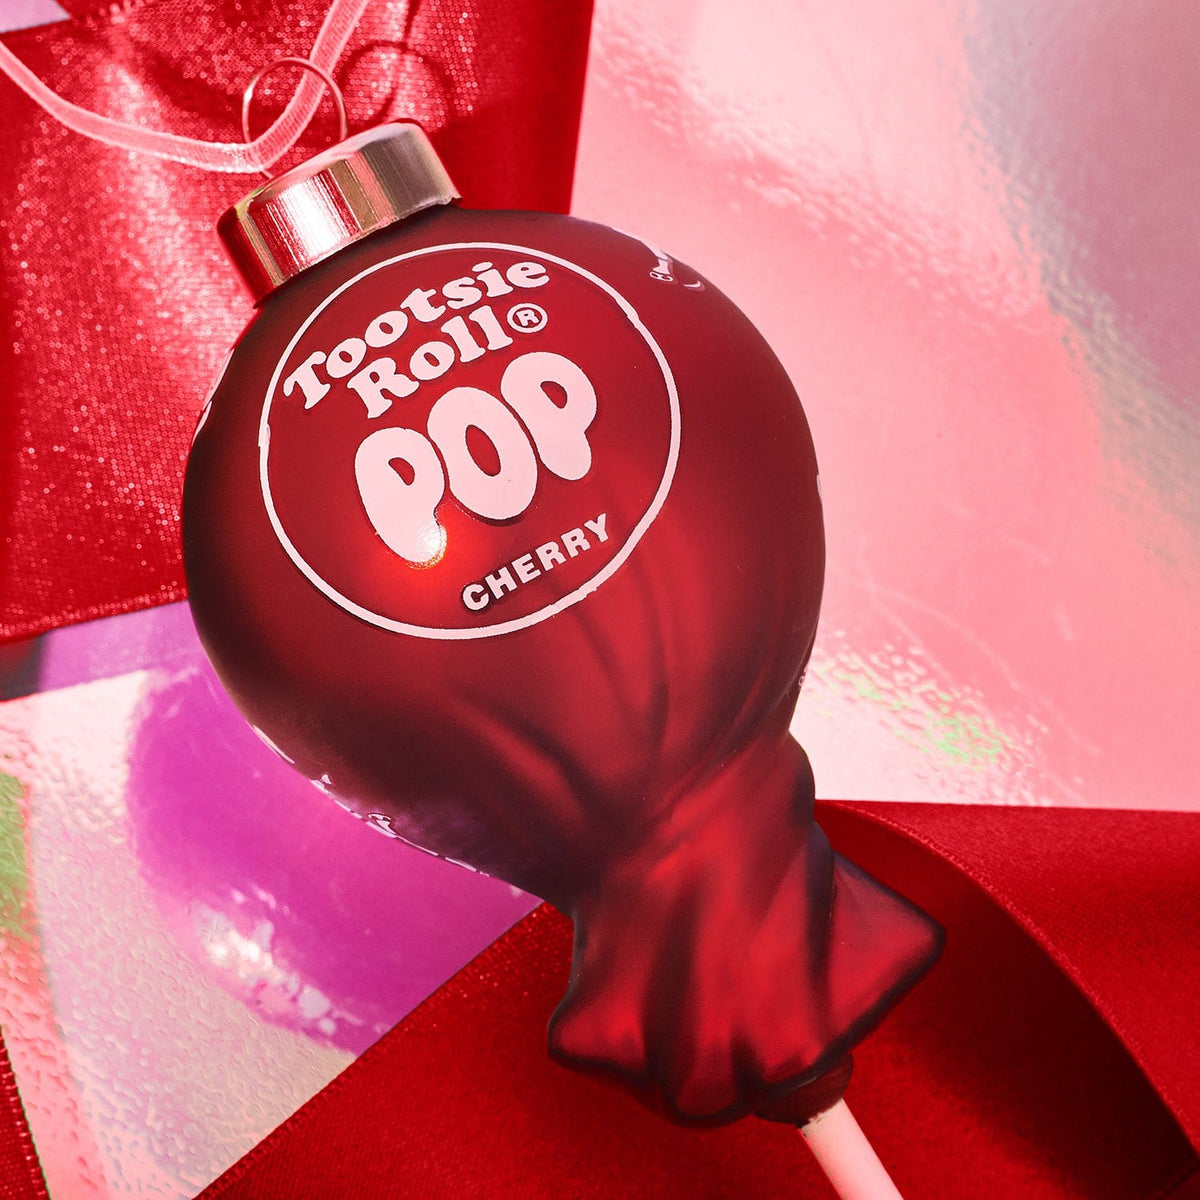 Cherry Tootsie Roll Pop Ornament 78493 0722 - Holiday22 - 